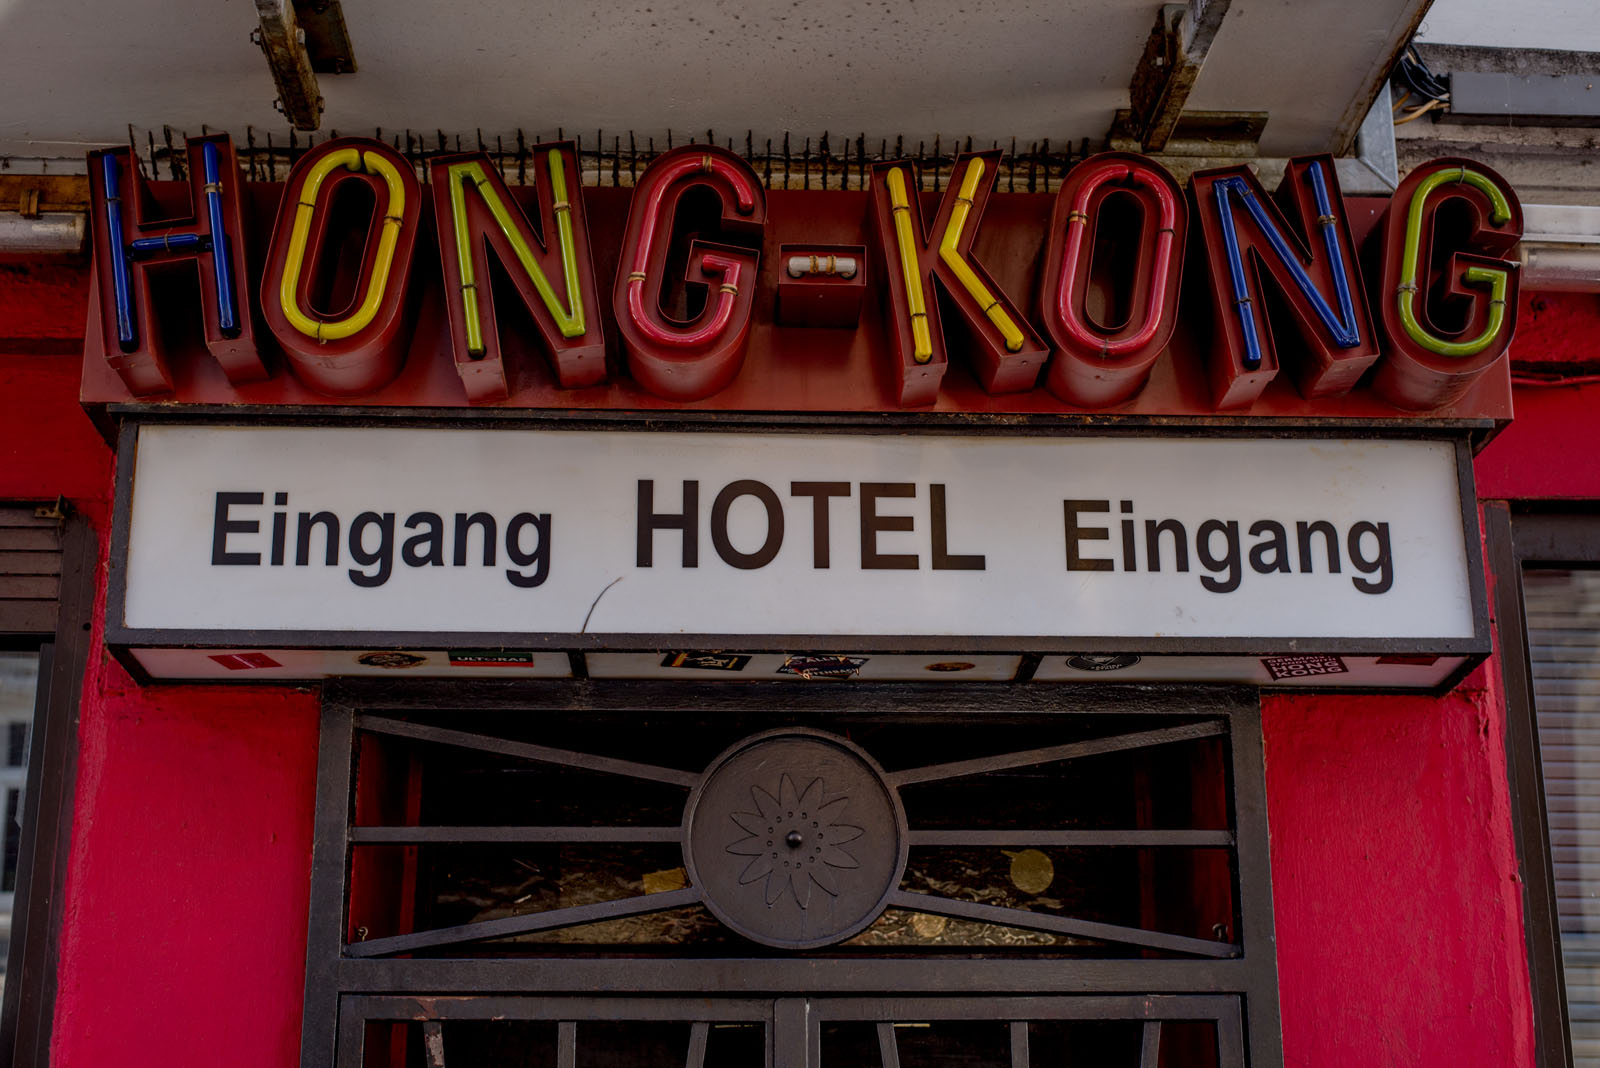 Hong-Kong Bar